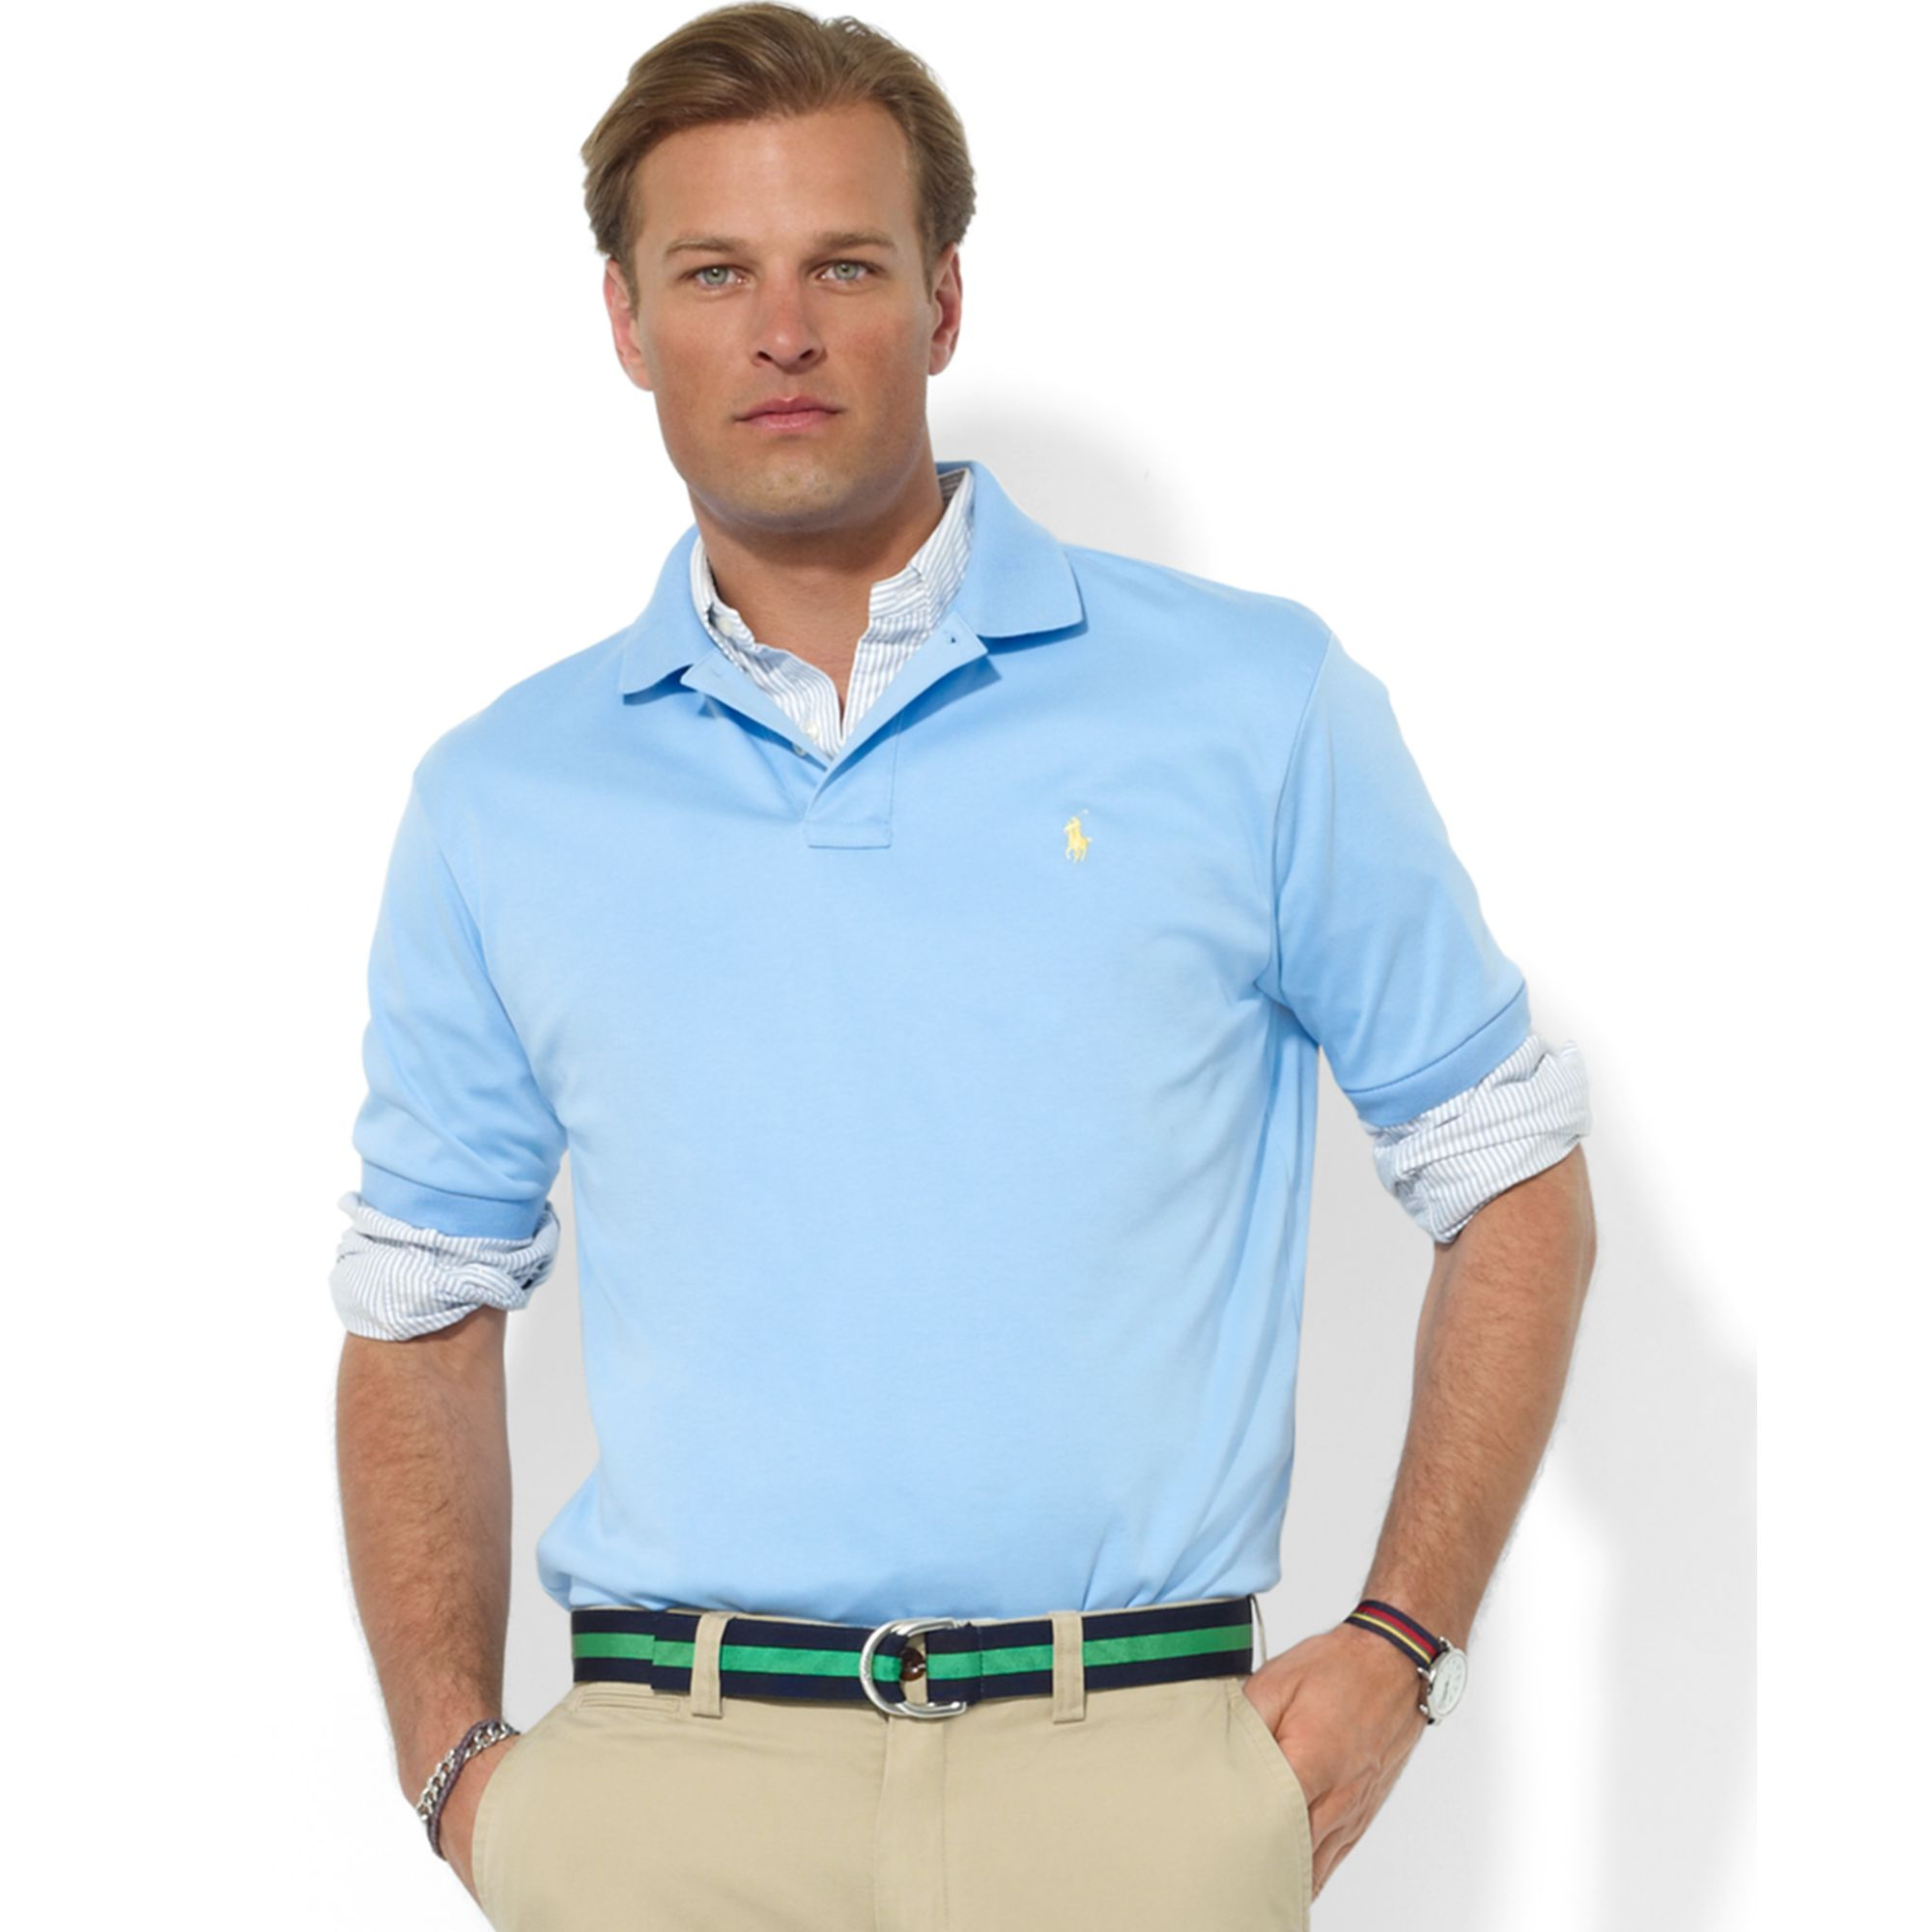 Lyst - Ralph Lauren Classic Fit Interlock Core Polo Shirt in Blue for Men